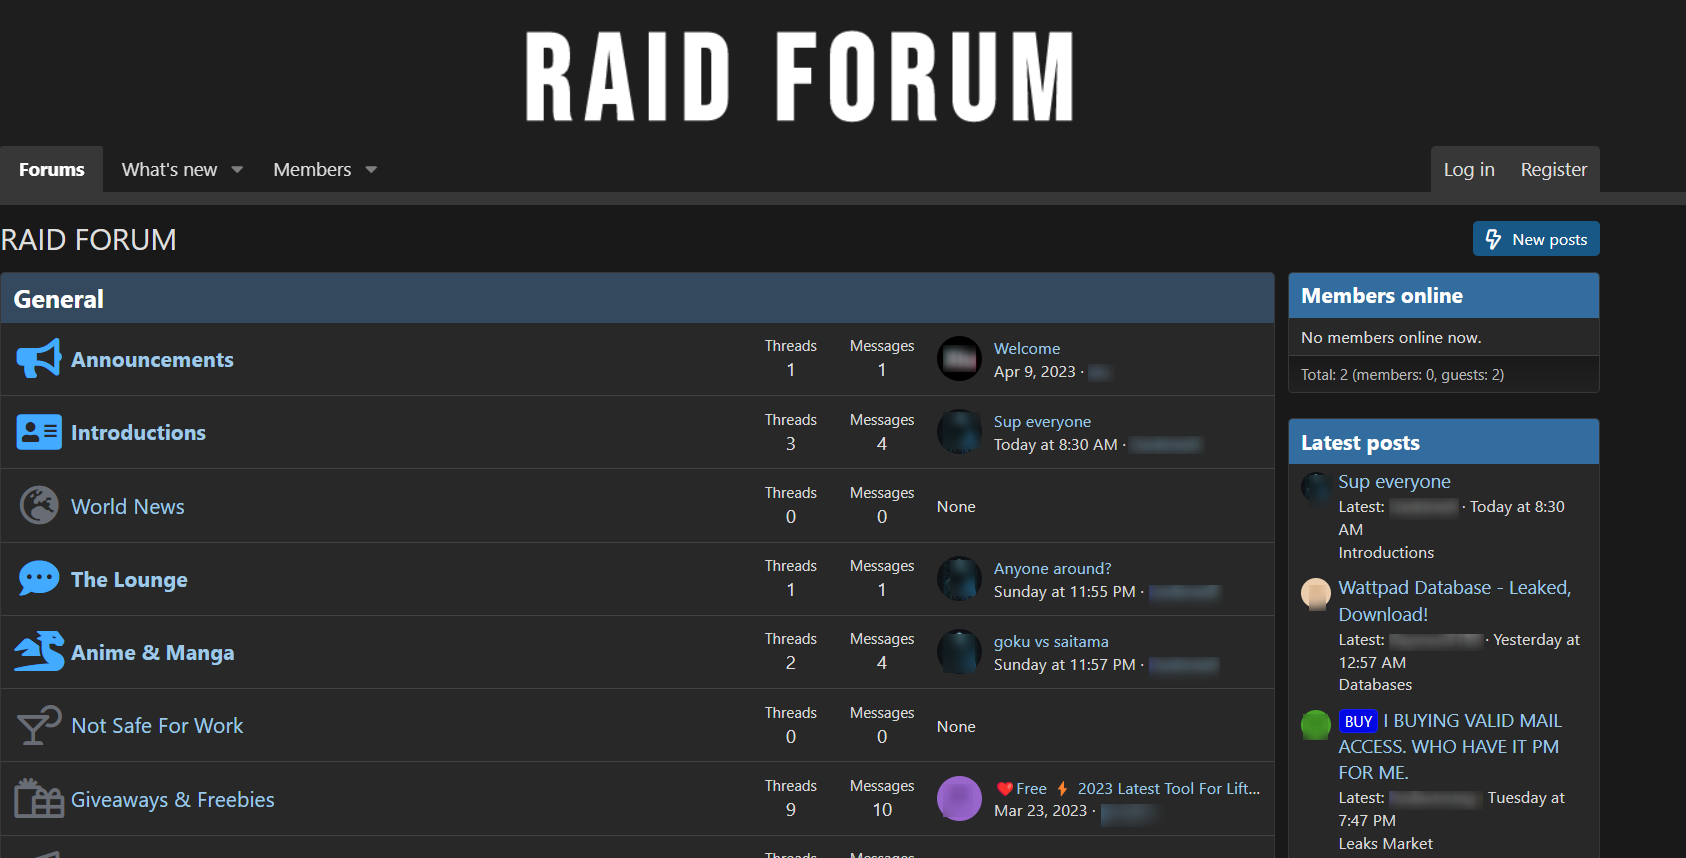 A screenshot of the new RAID FORUM’s homepage